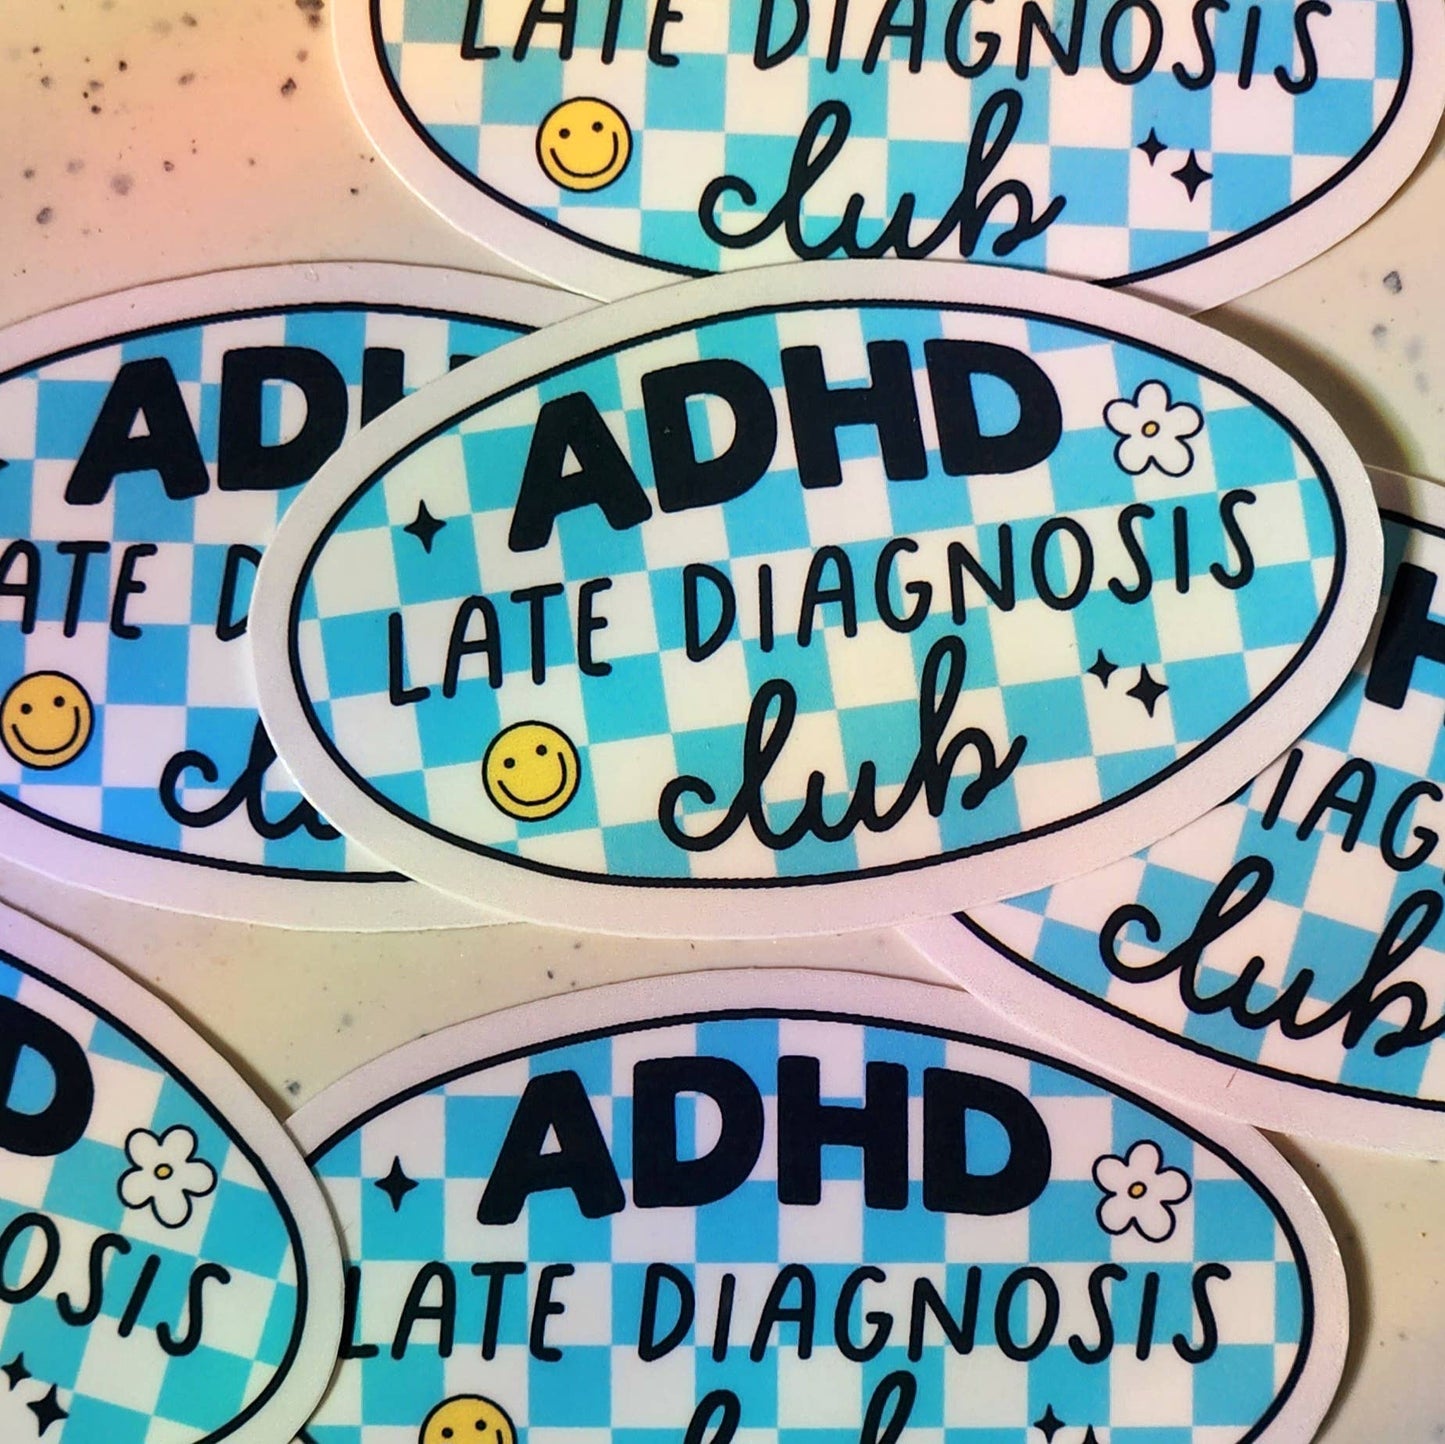 Adhd sticker neurodivergent late diagnosishydroflask planner: Holographic